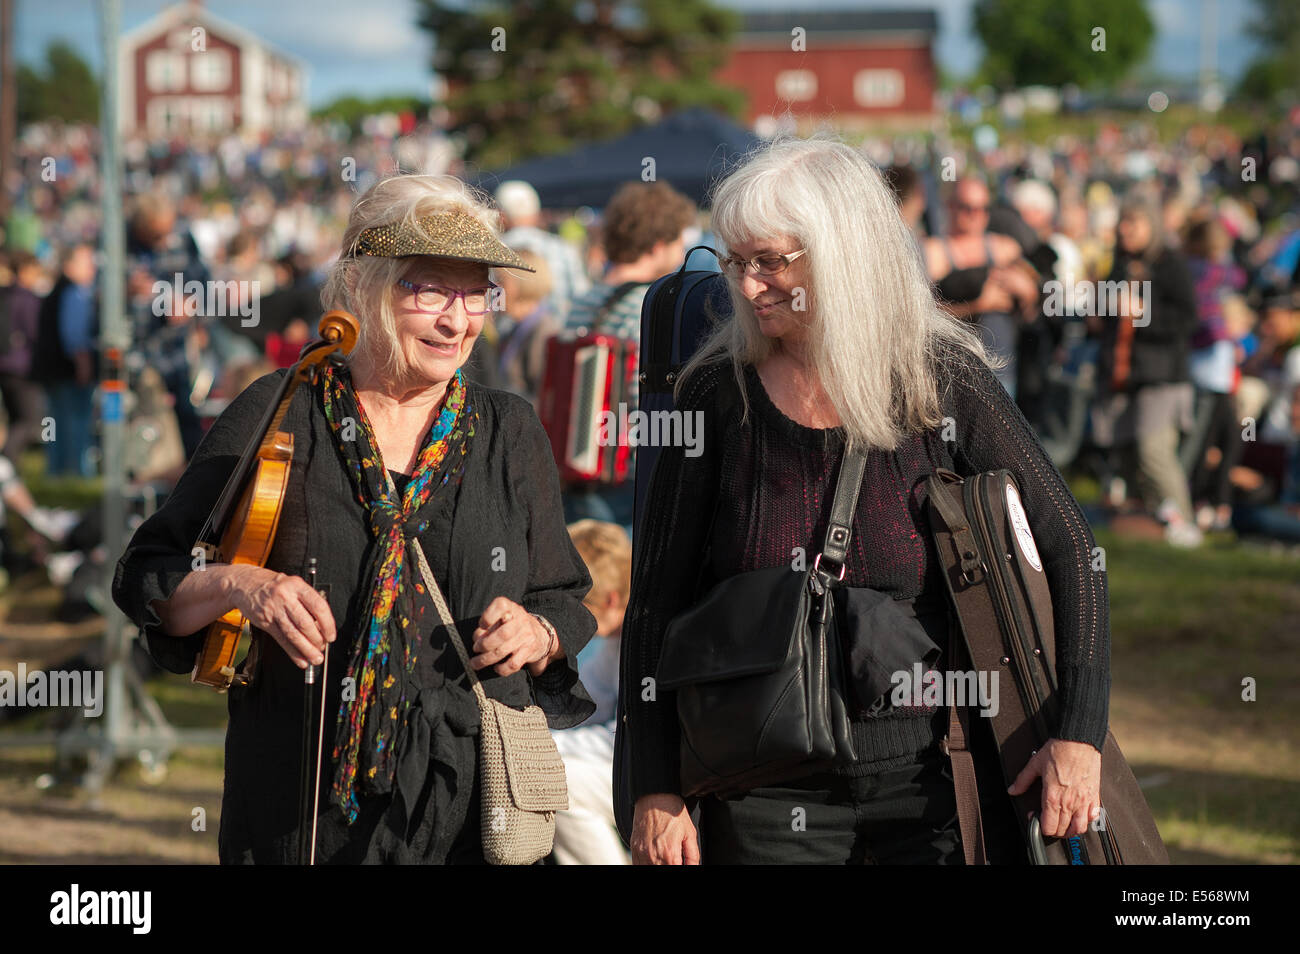 Zwei lächelnde Musikerinnen auf dem berühmten traditionellen Volksmusikfestival in Bingsjo, Schweden. Stockfoto